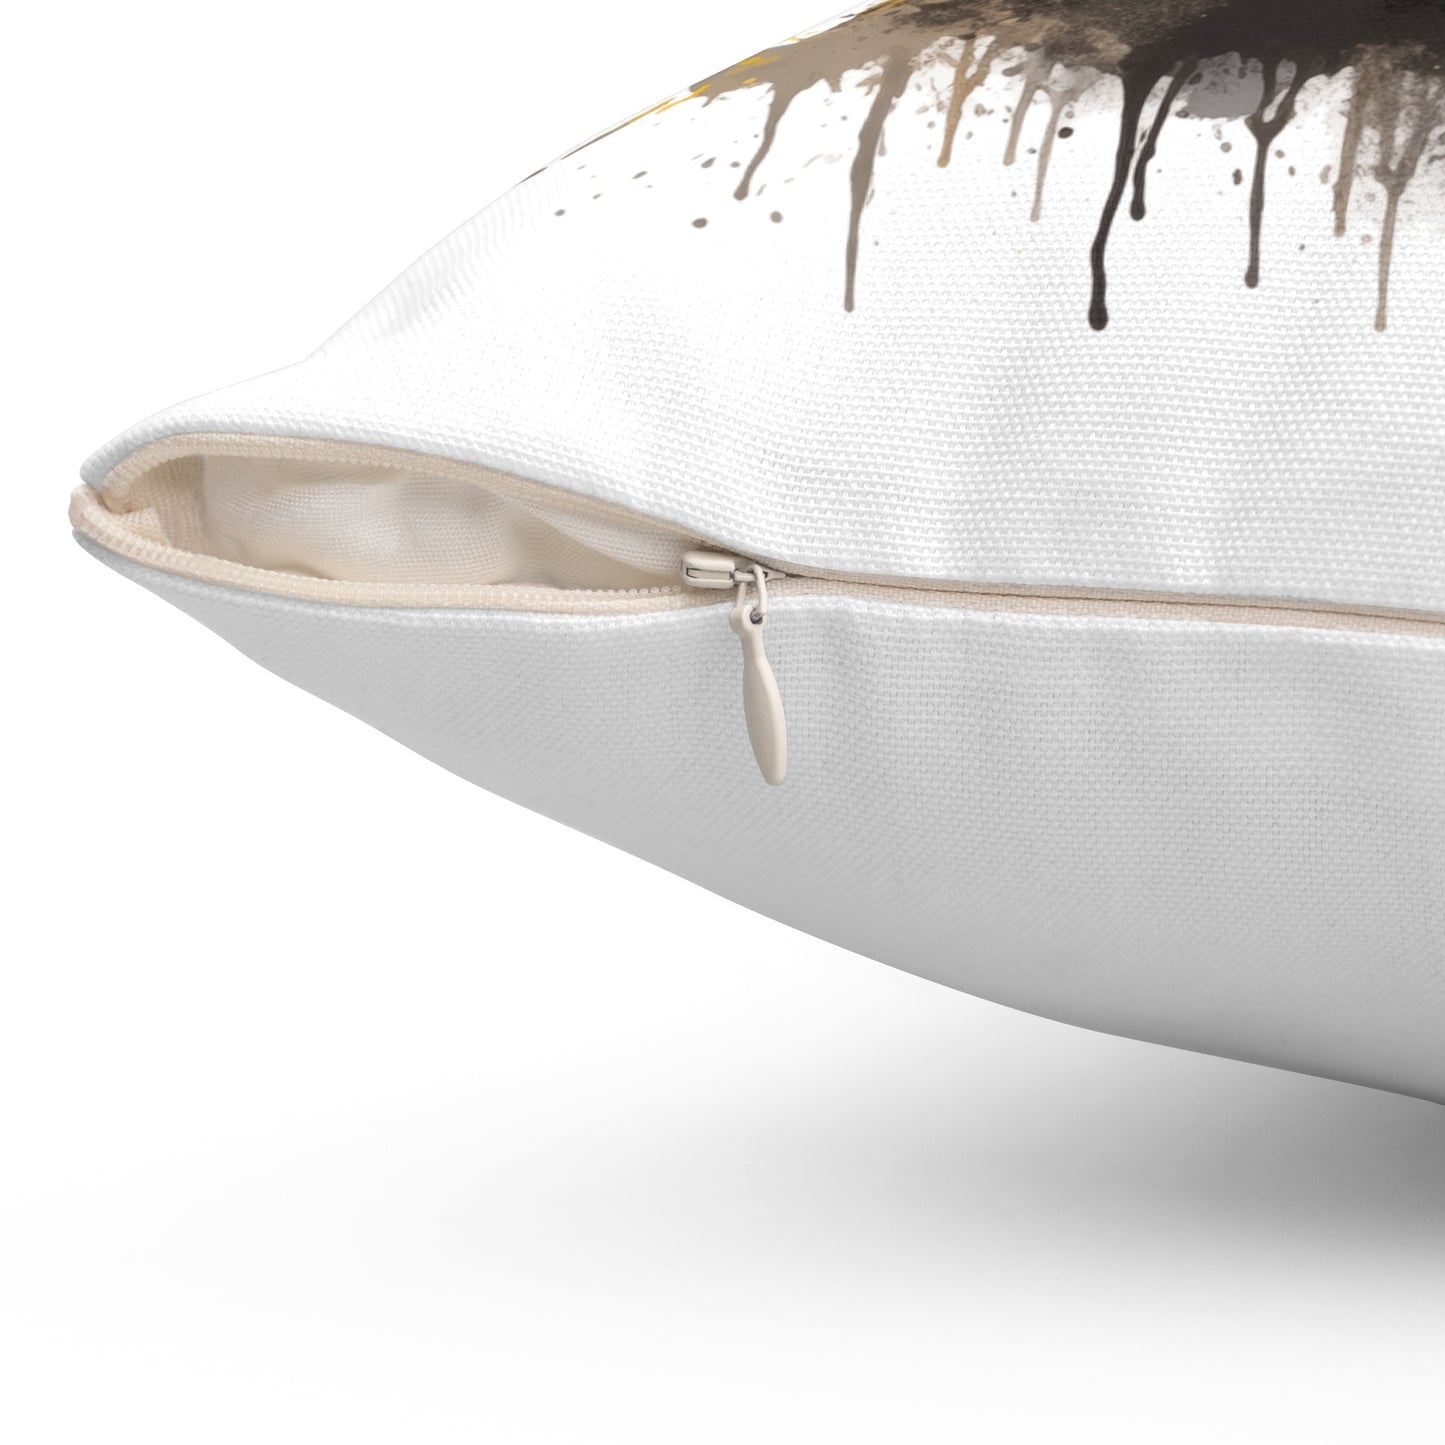 Dachshund Delight - Charming Dachshund Decorative Pillow